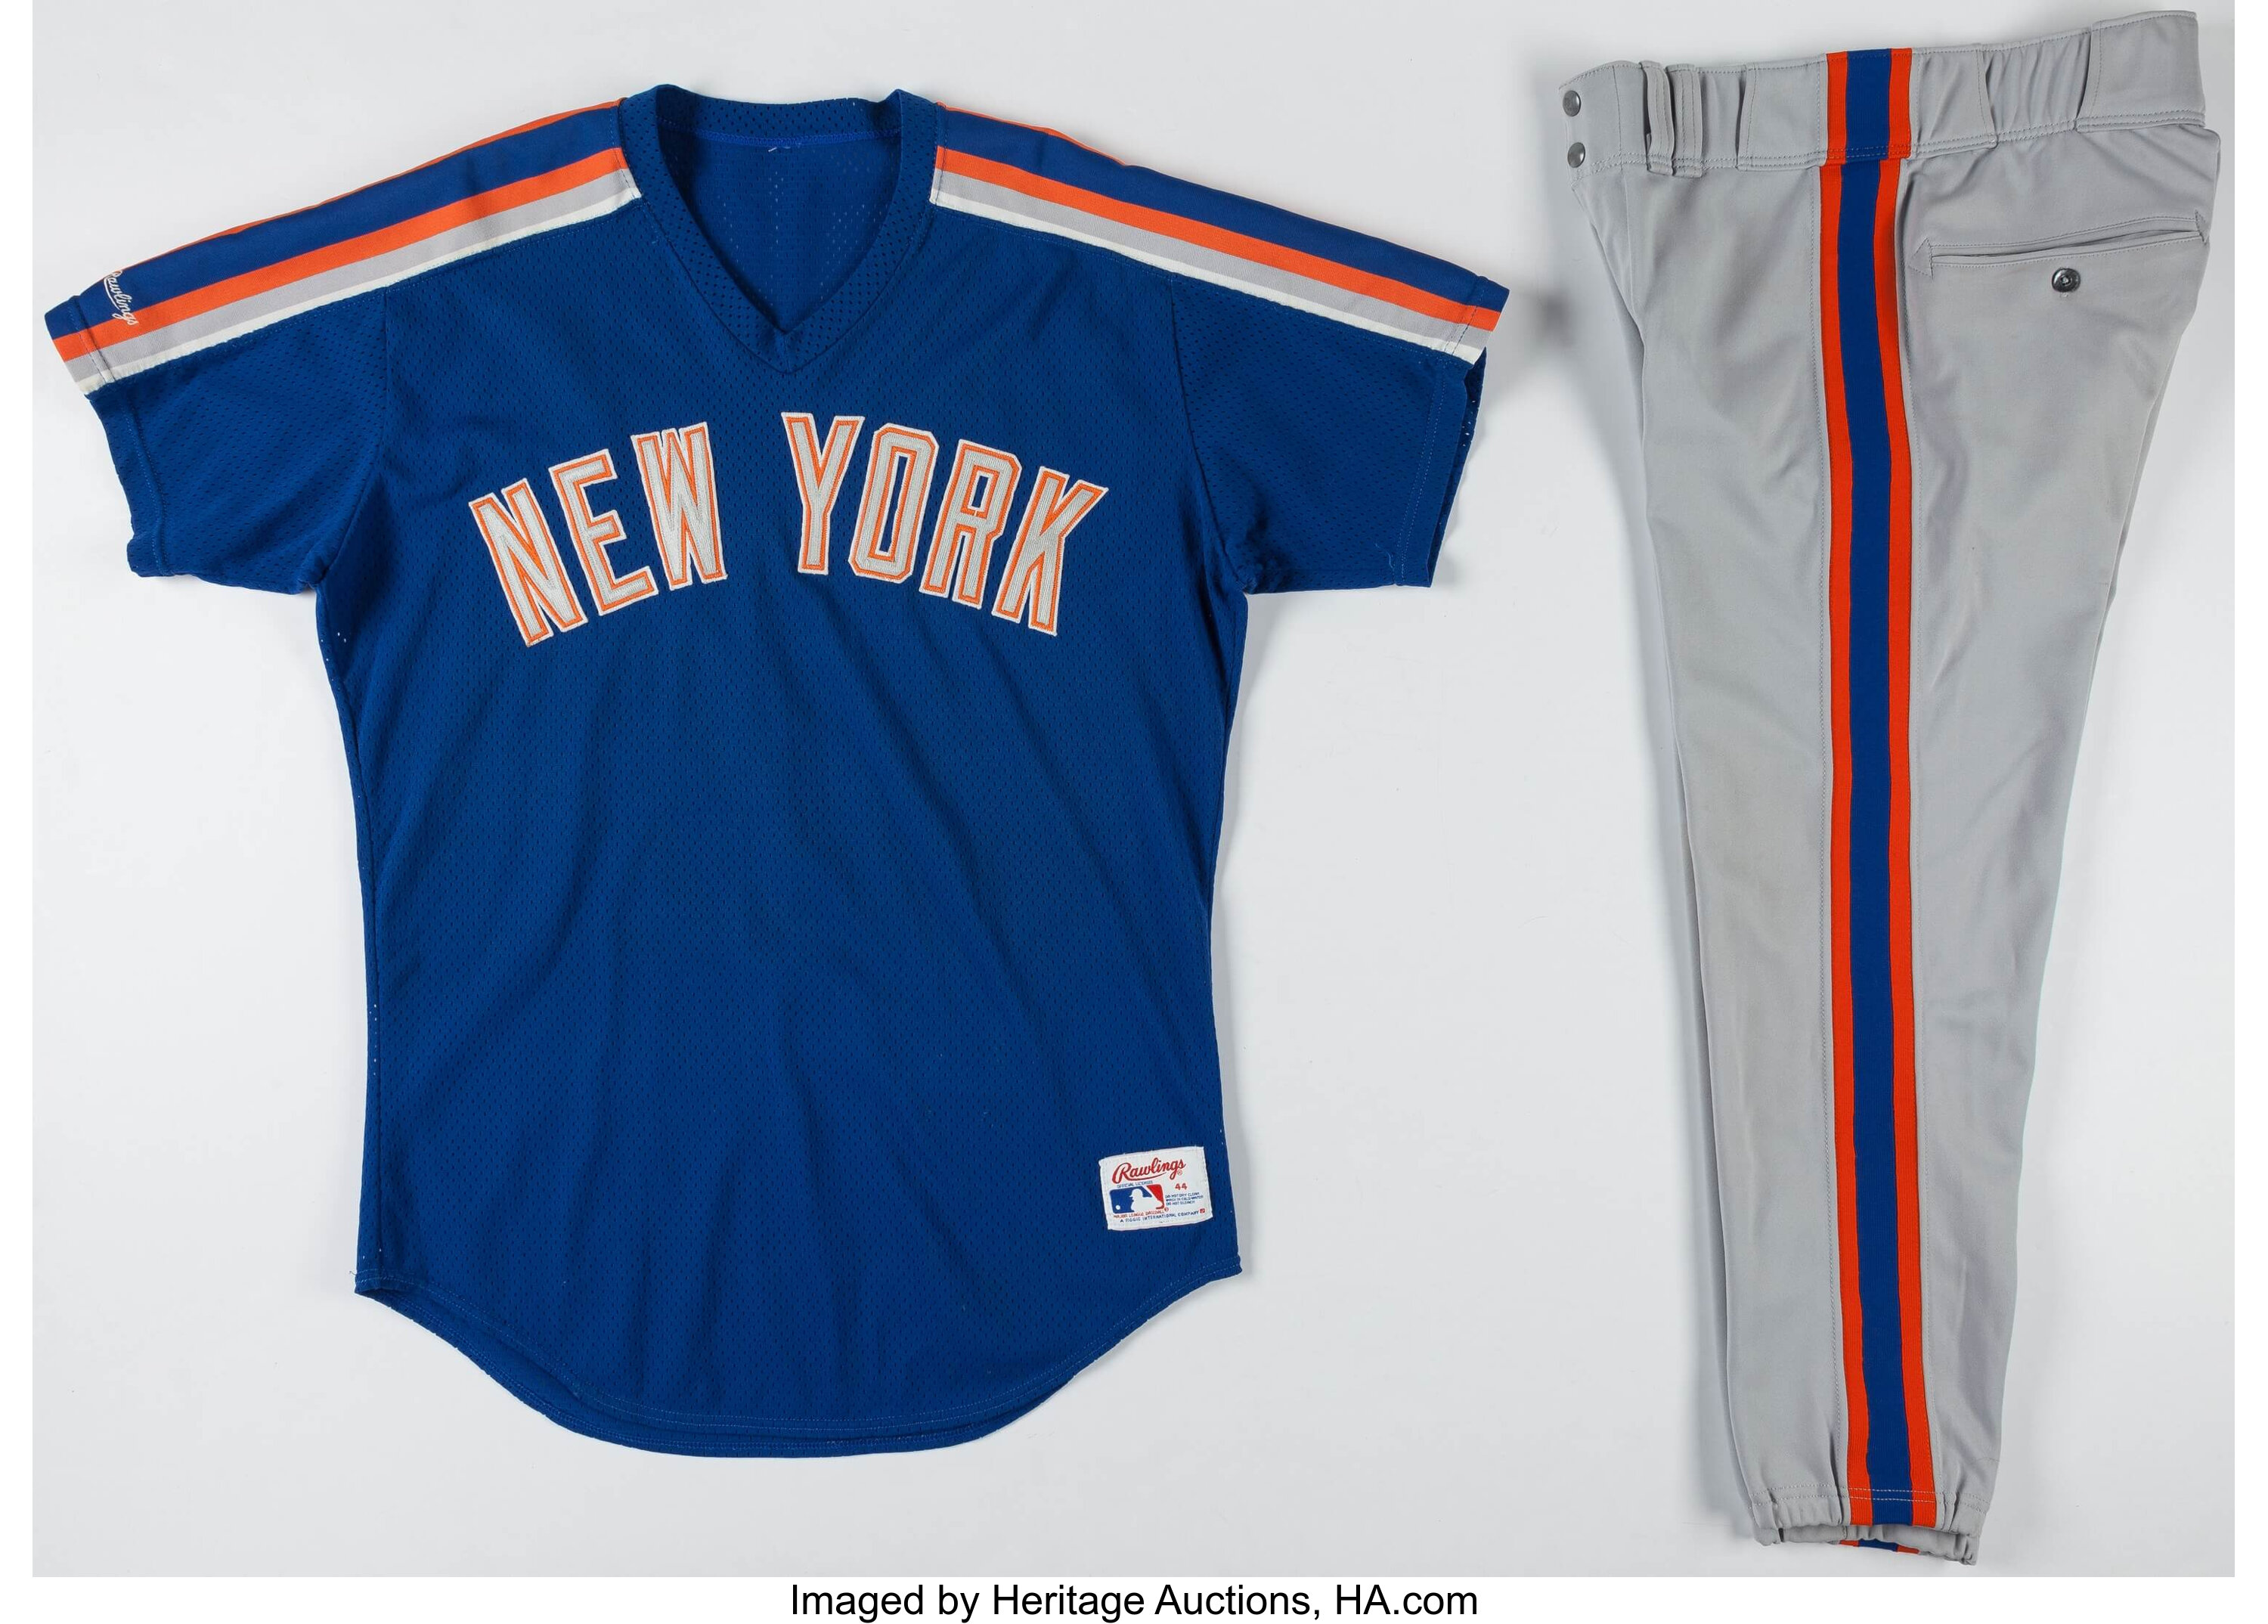 Circa 1993 New York Mets Batting Practice Worn Jersey & Pants